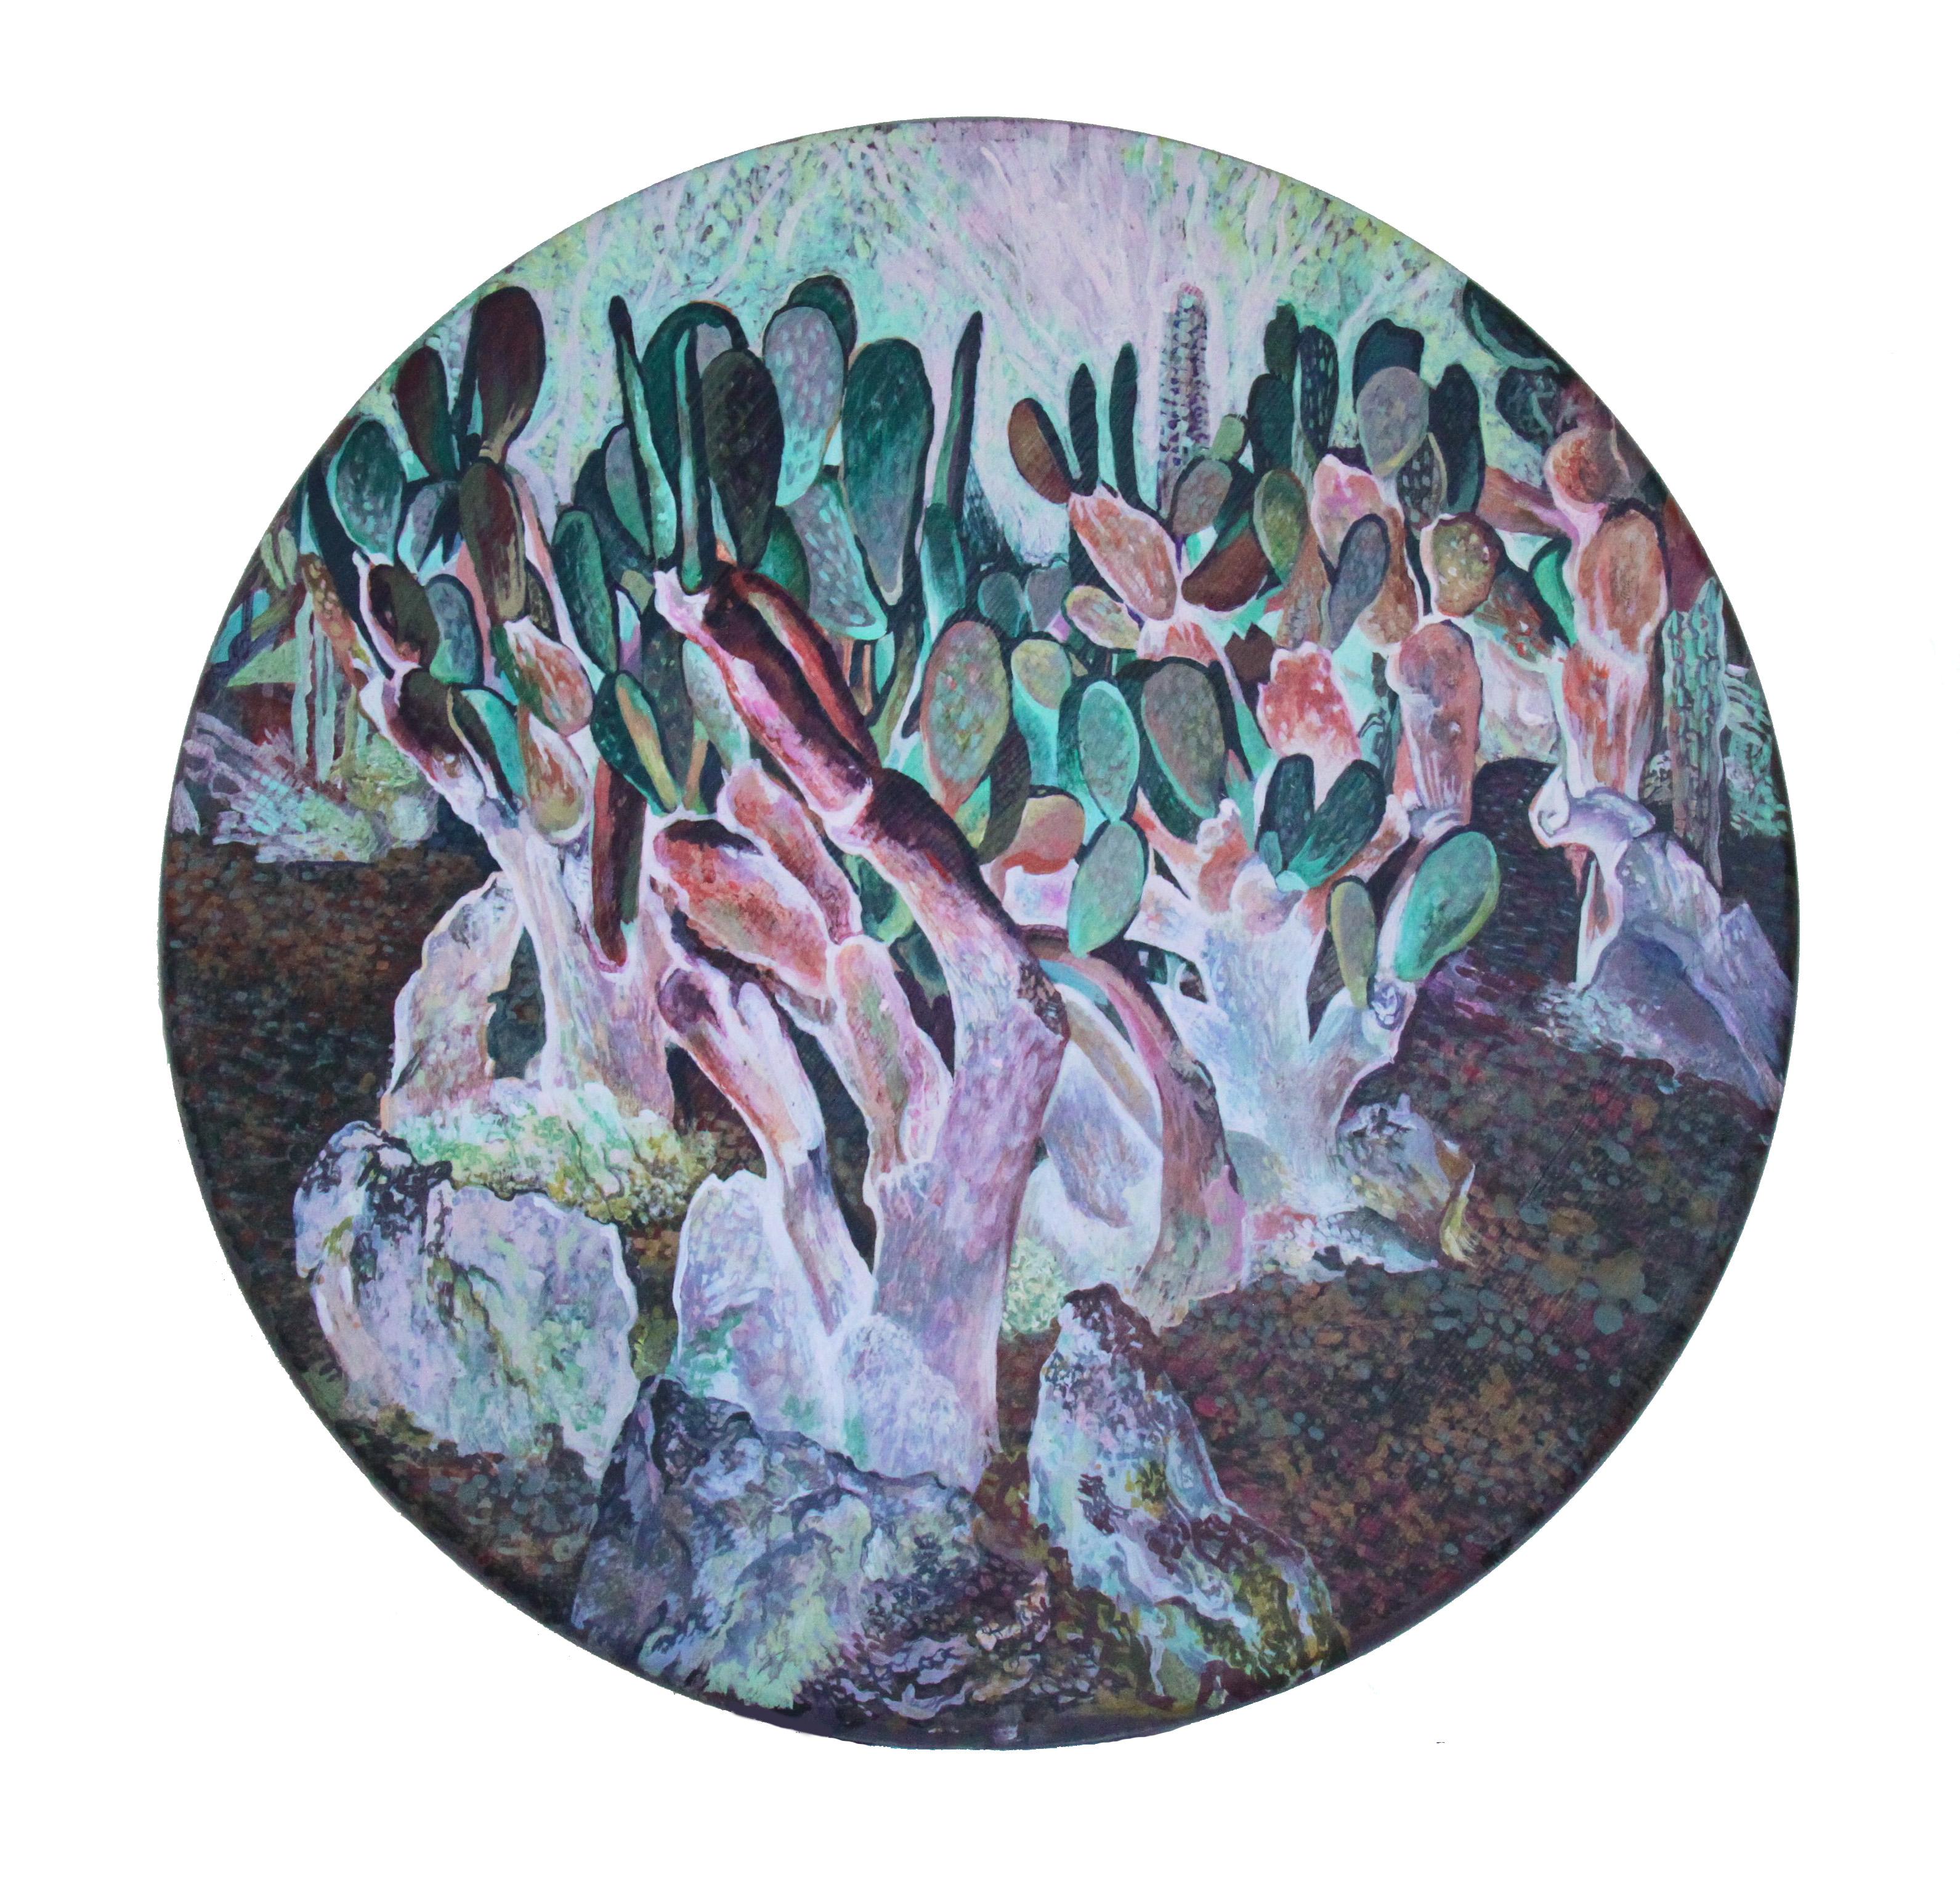 Nikolina Kovalenko Figurative Painting - Noon (cactus) - circle wood panel, made in lavander, violet, green, pink color